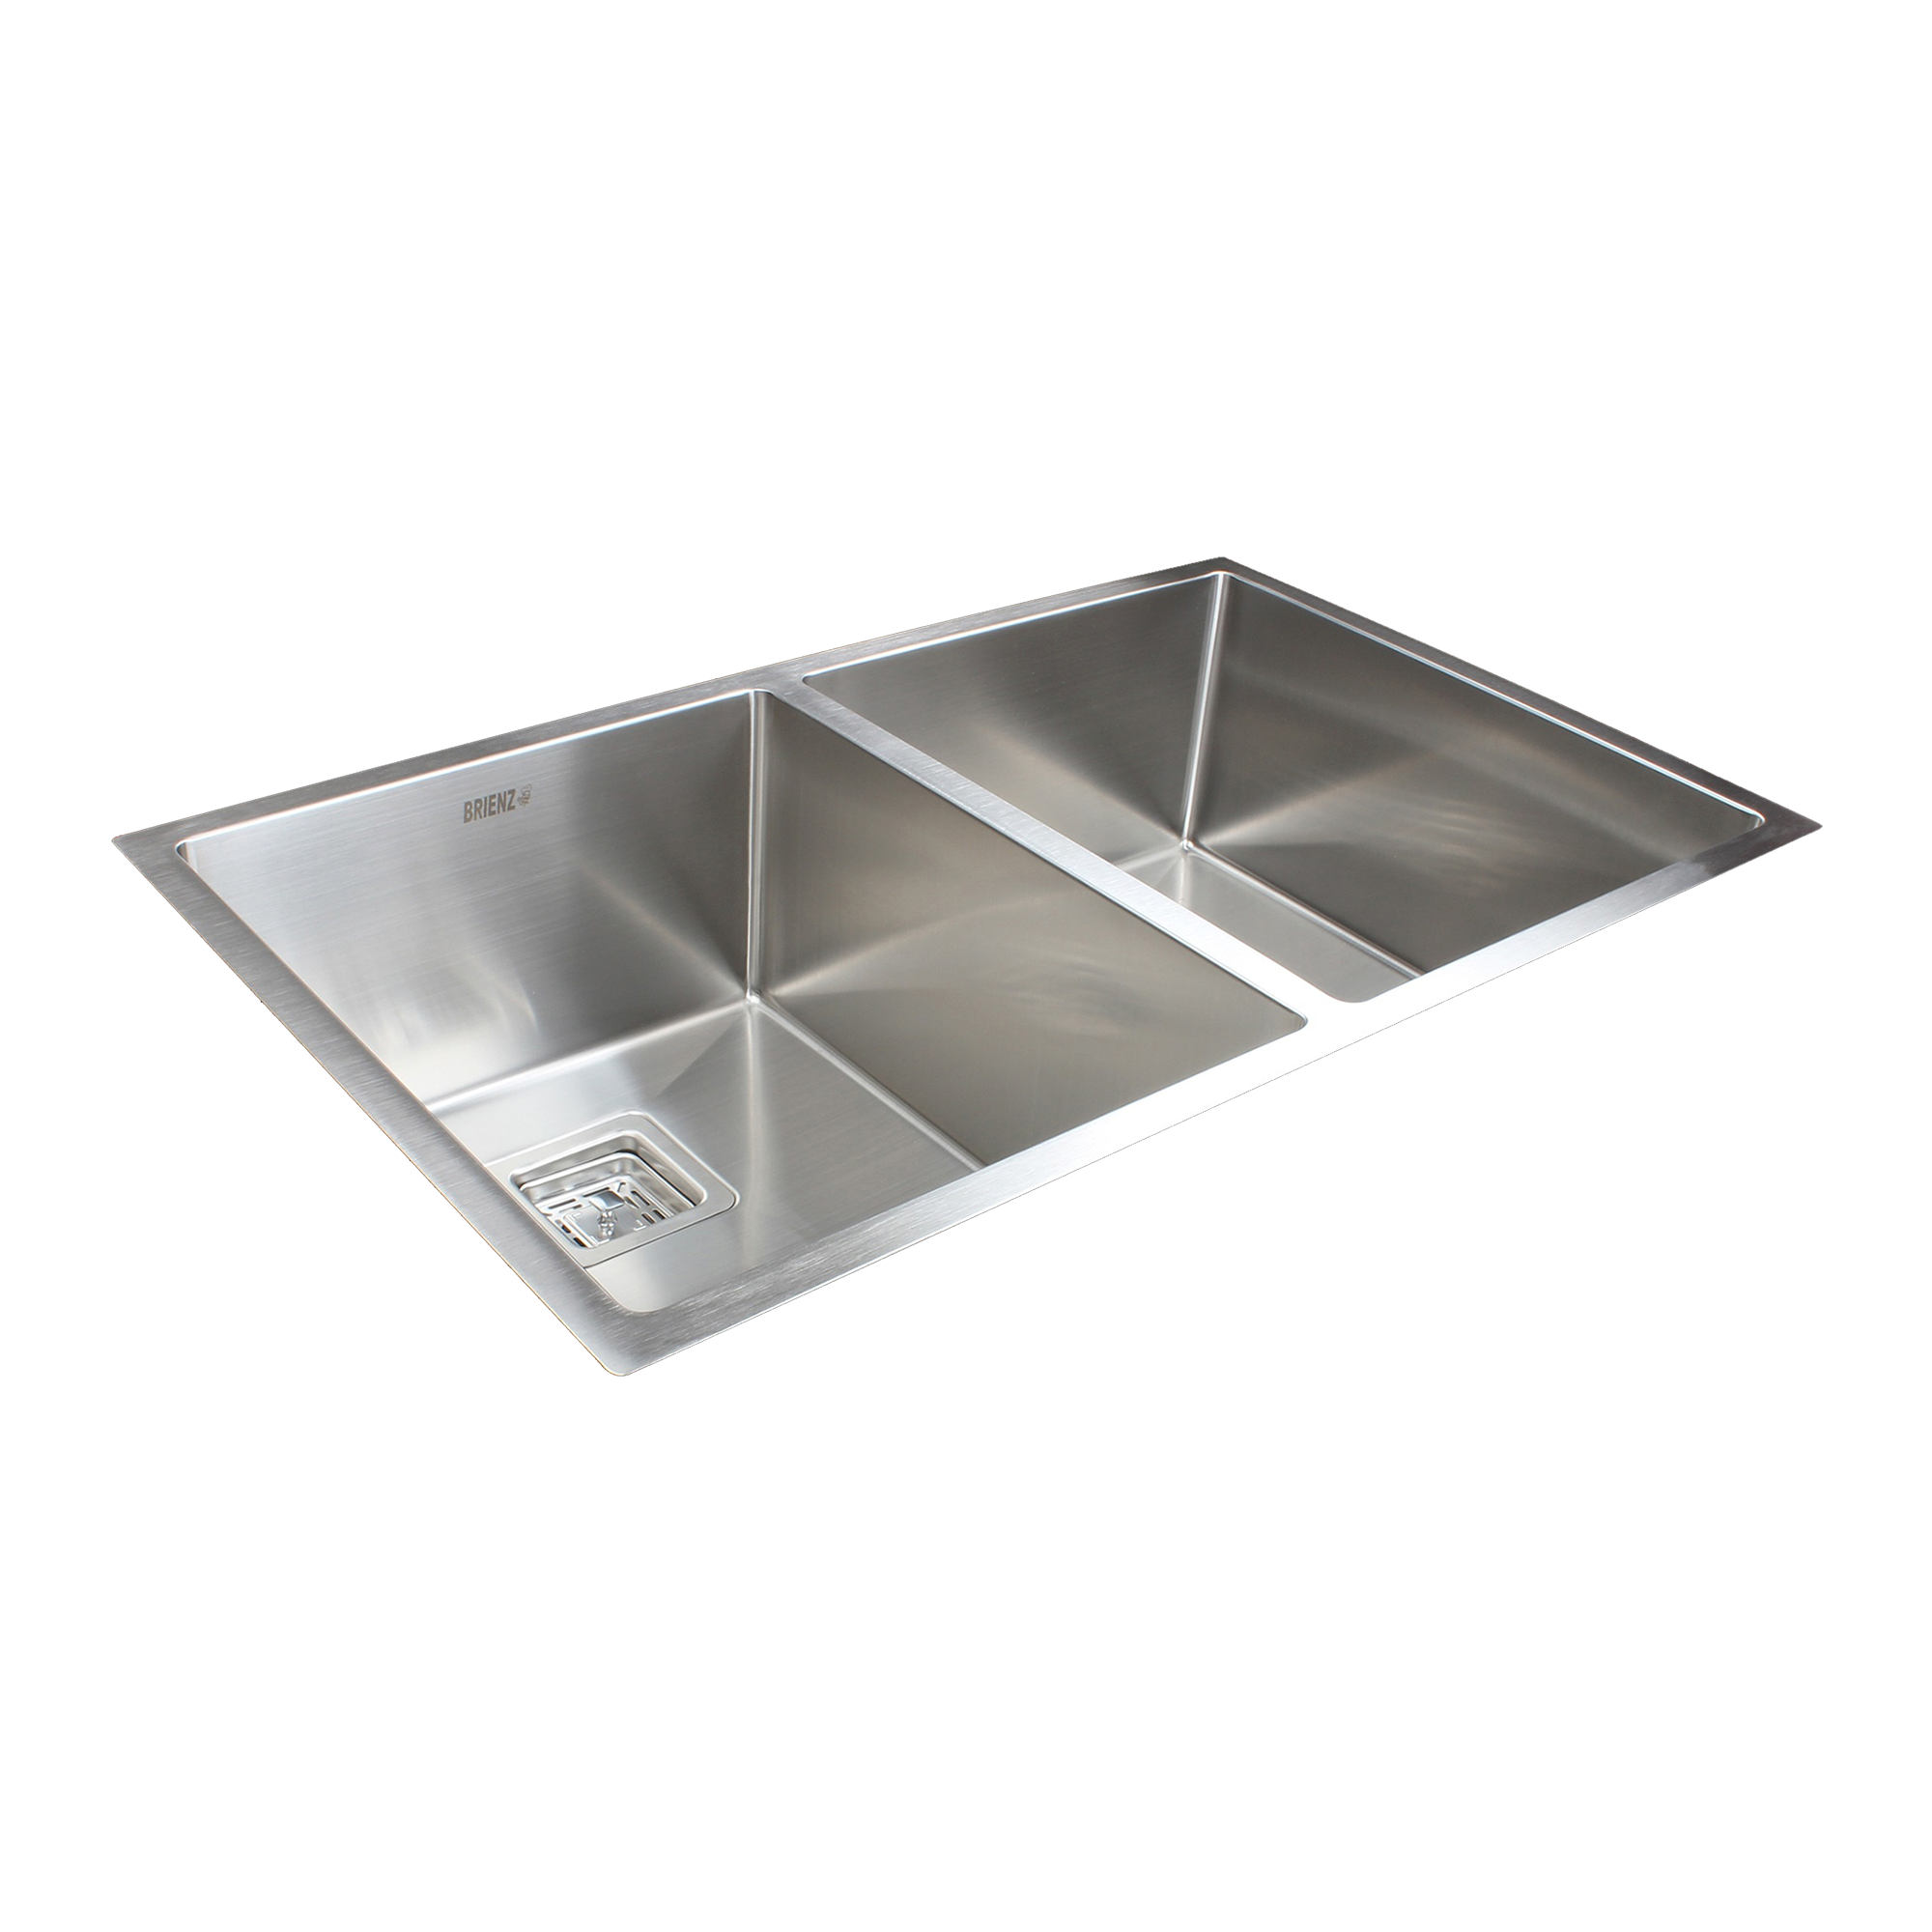 835x505mm Handmade 1.5mm Stainless Steel Undermount / Topmount Kitchen Sink with Square Waste